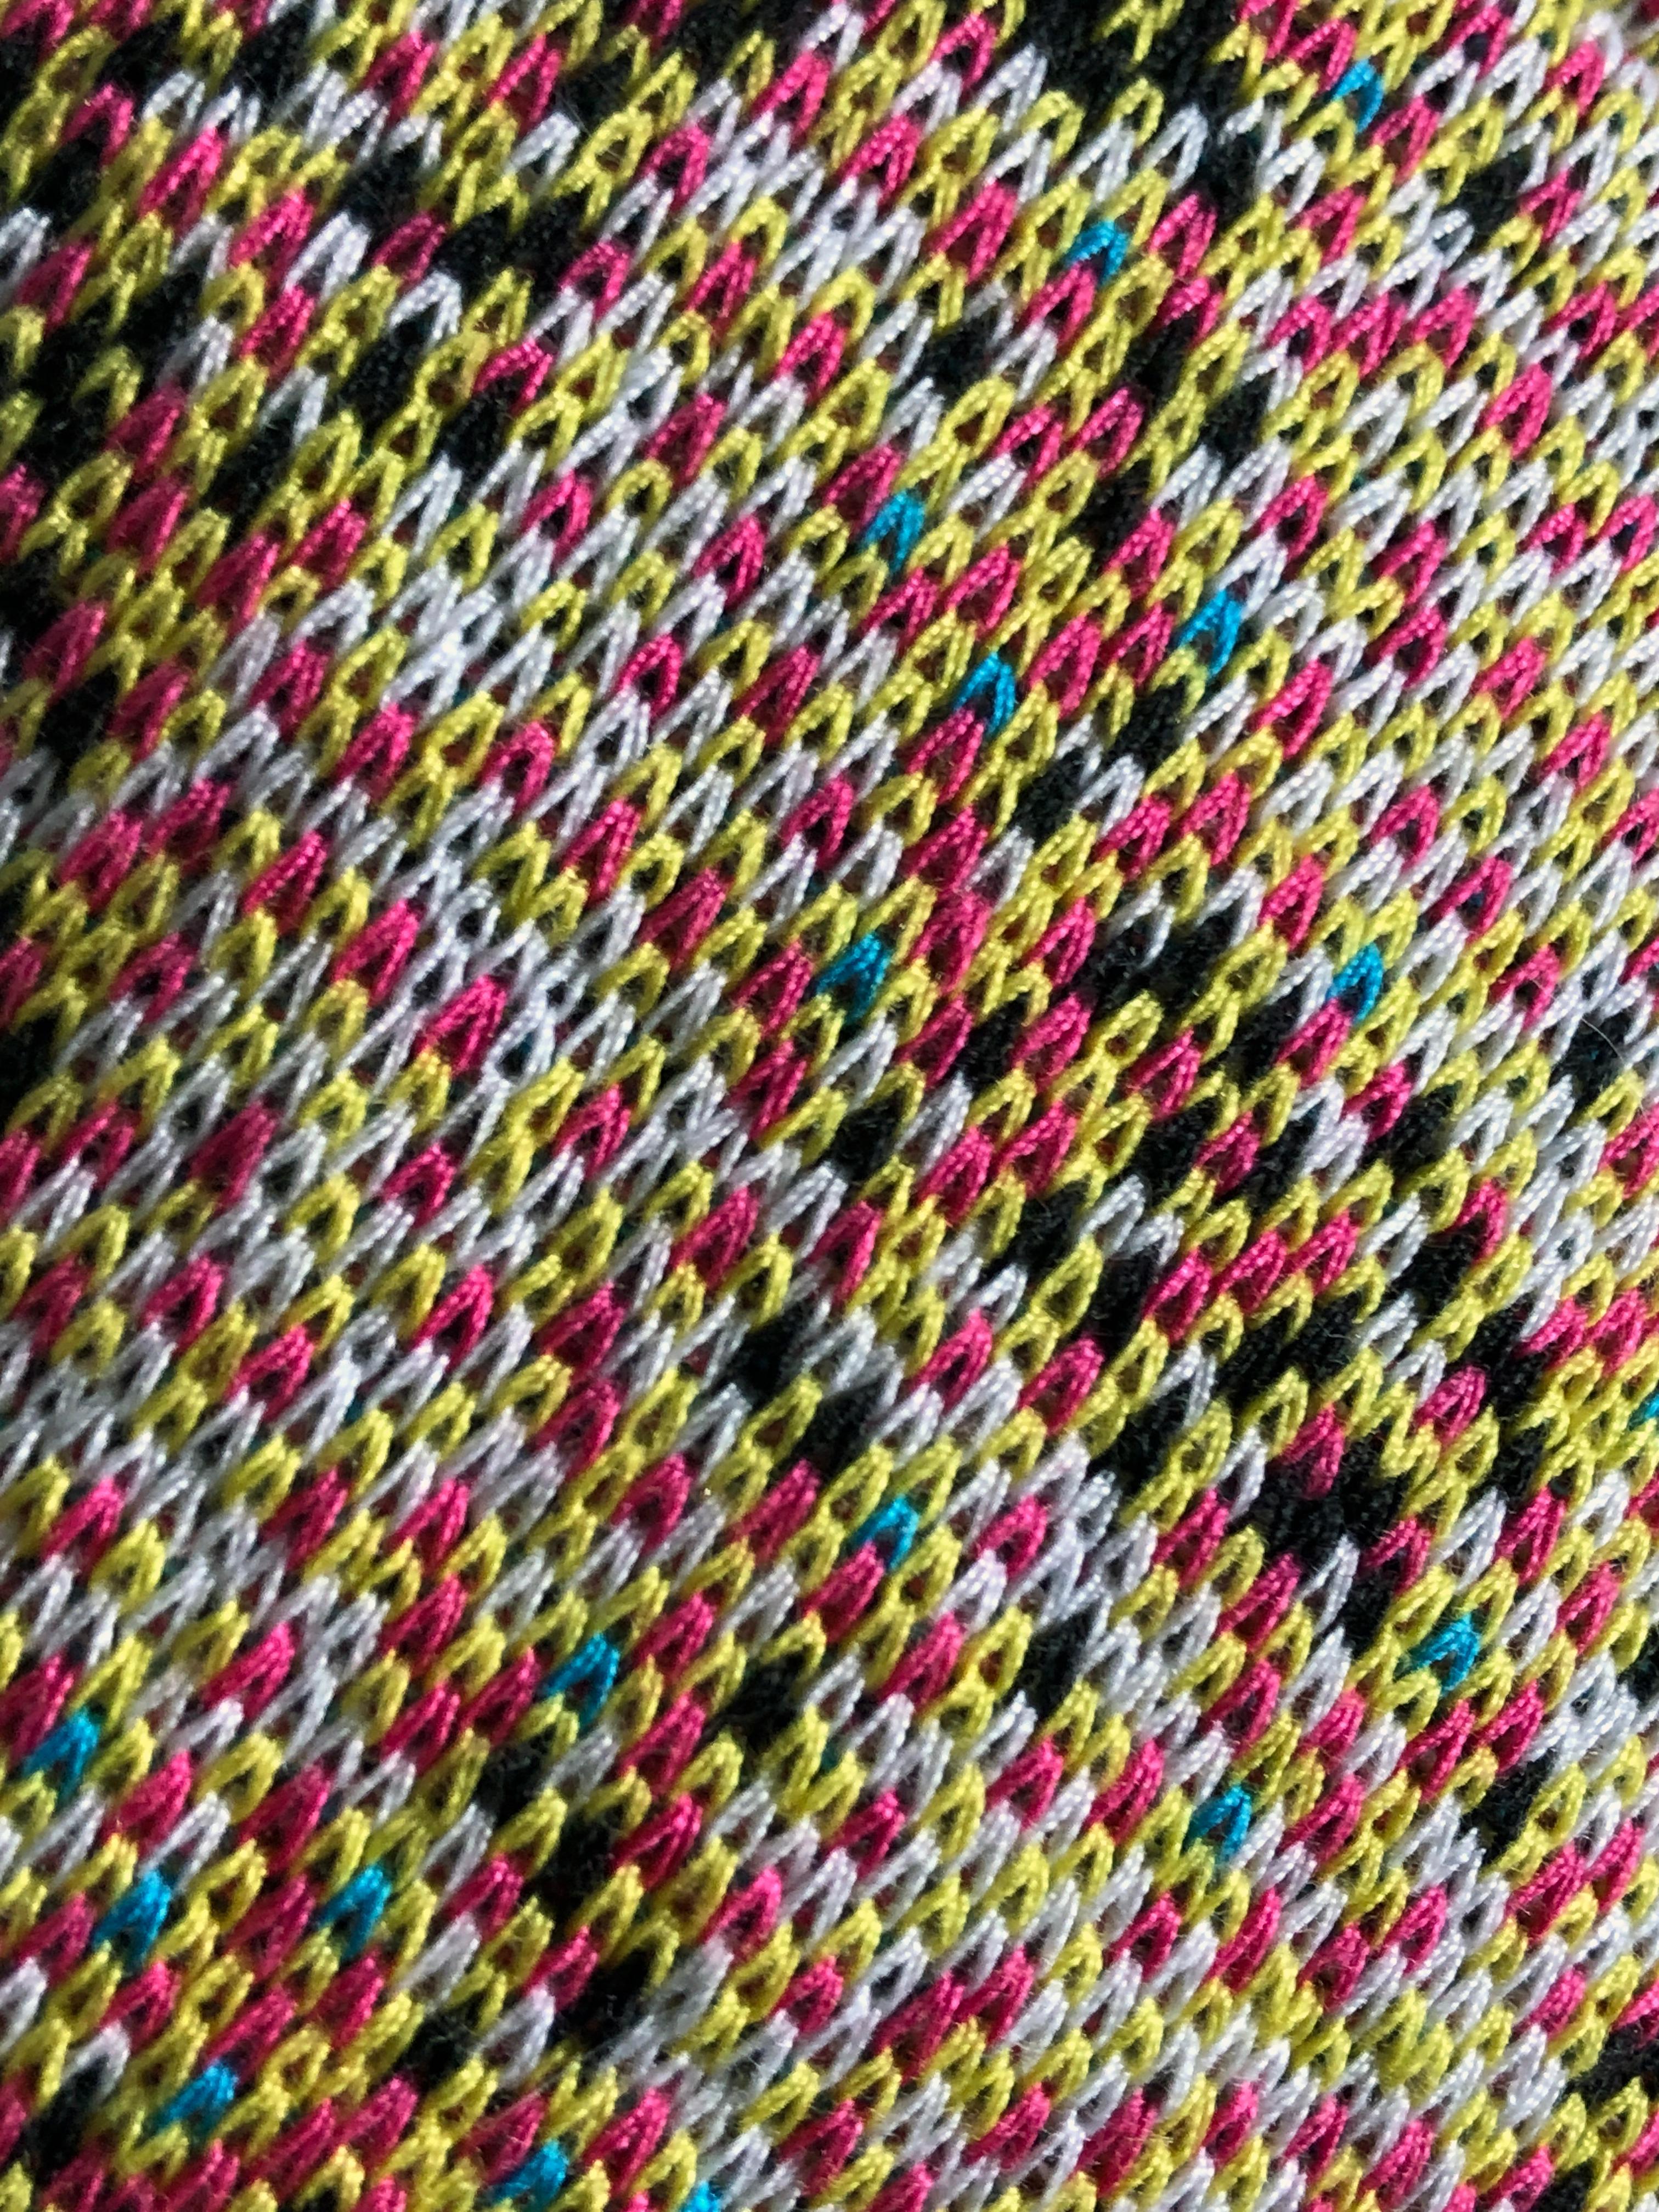 Needlework Short Cottonwood Tree log bolster knitted pixeled pillow - Textile - Pillows For Sale